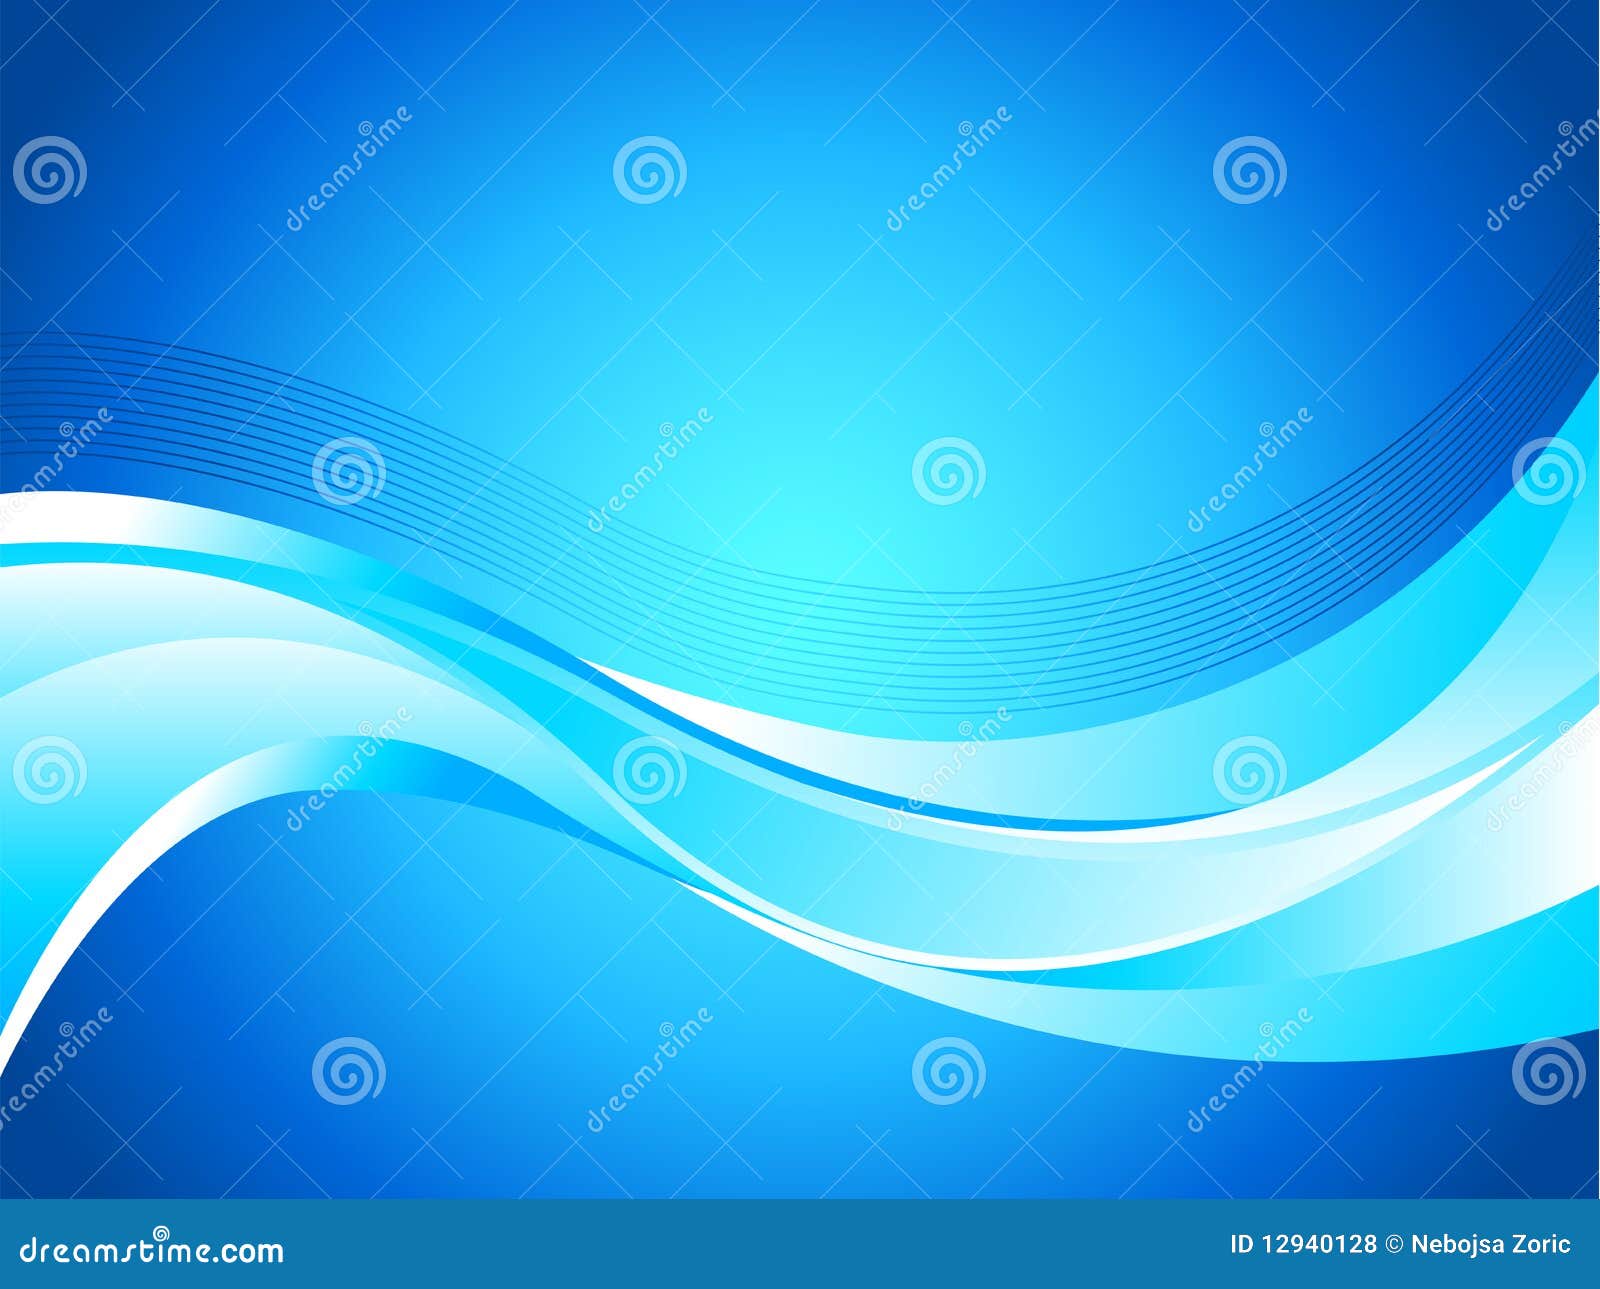 Blue wave background stock vector. Illustration of concept - 12940128